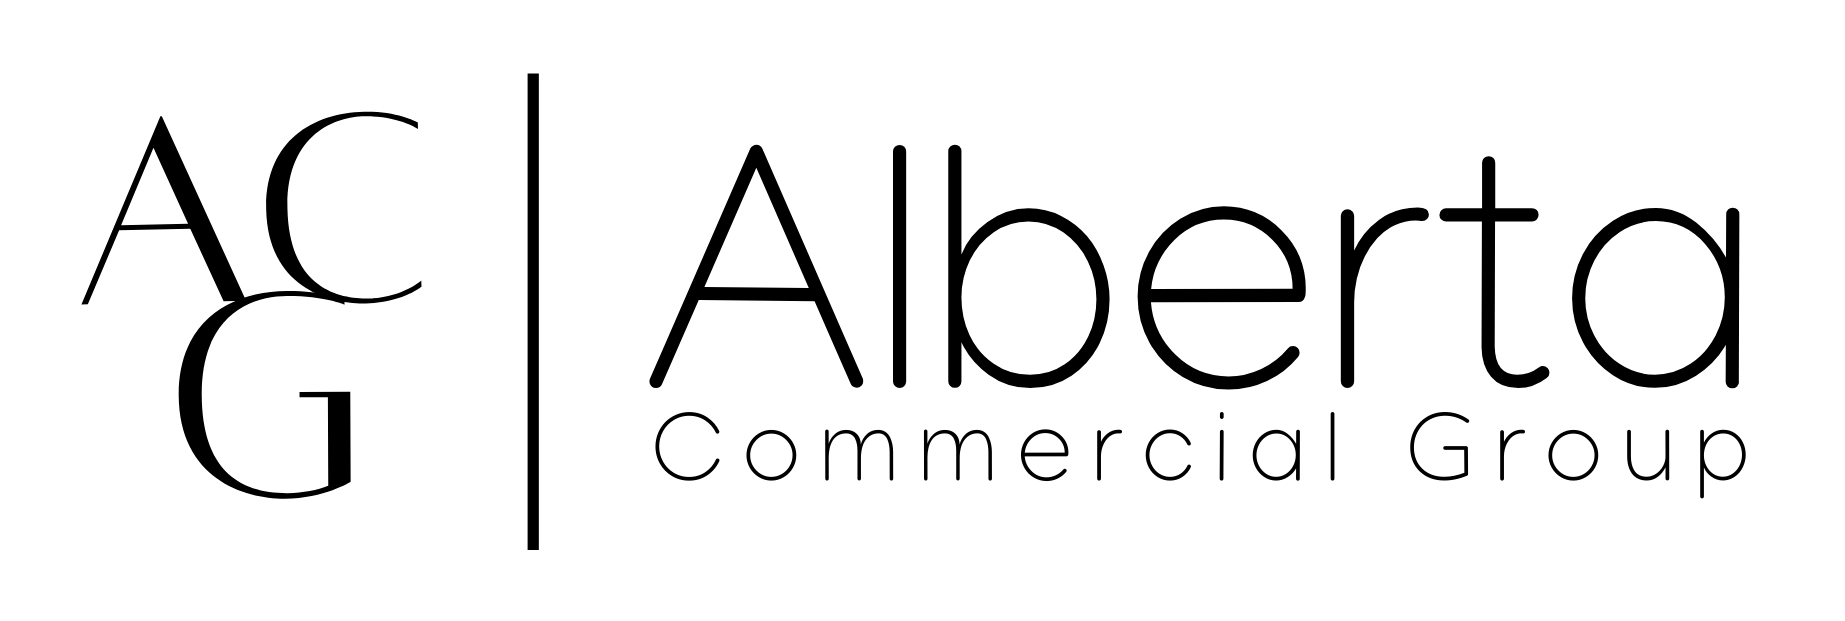 Black_ACG Logo.png